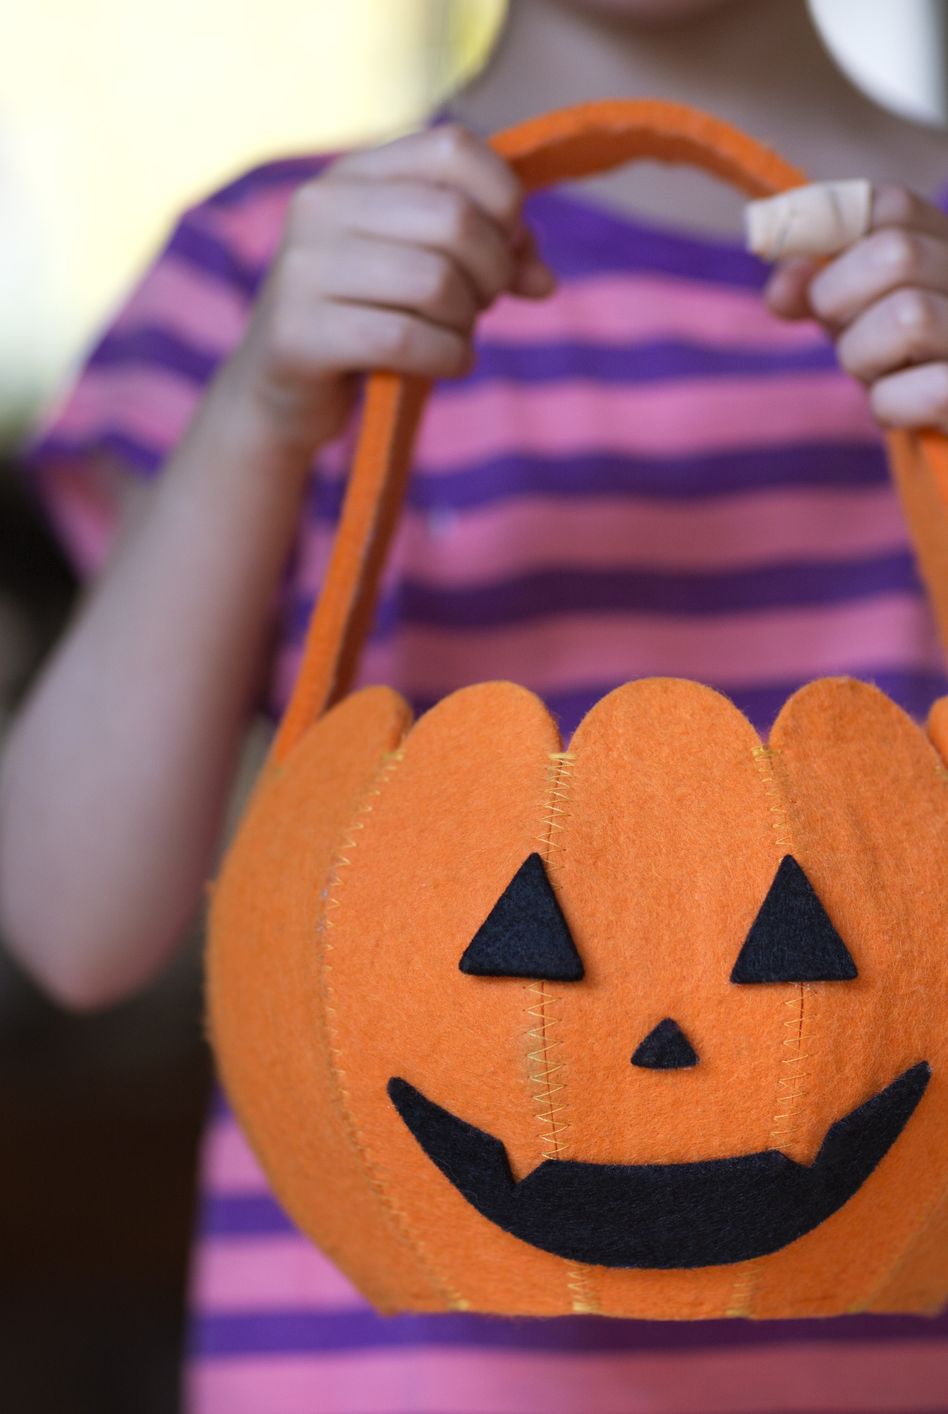 15 Fun Quarantine Halloween Ideas - How to Celebrate Halloween 2020